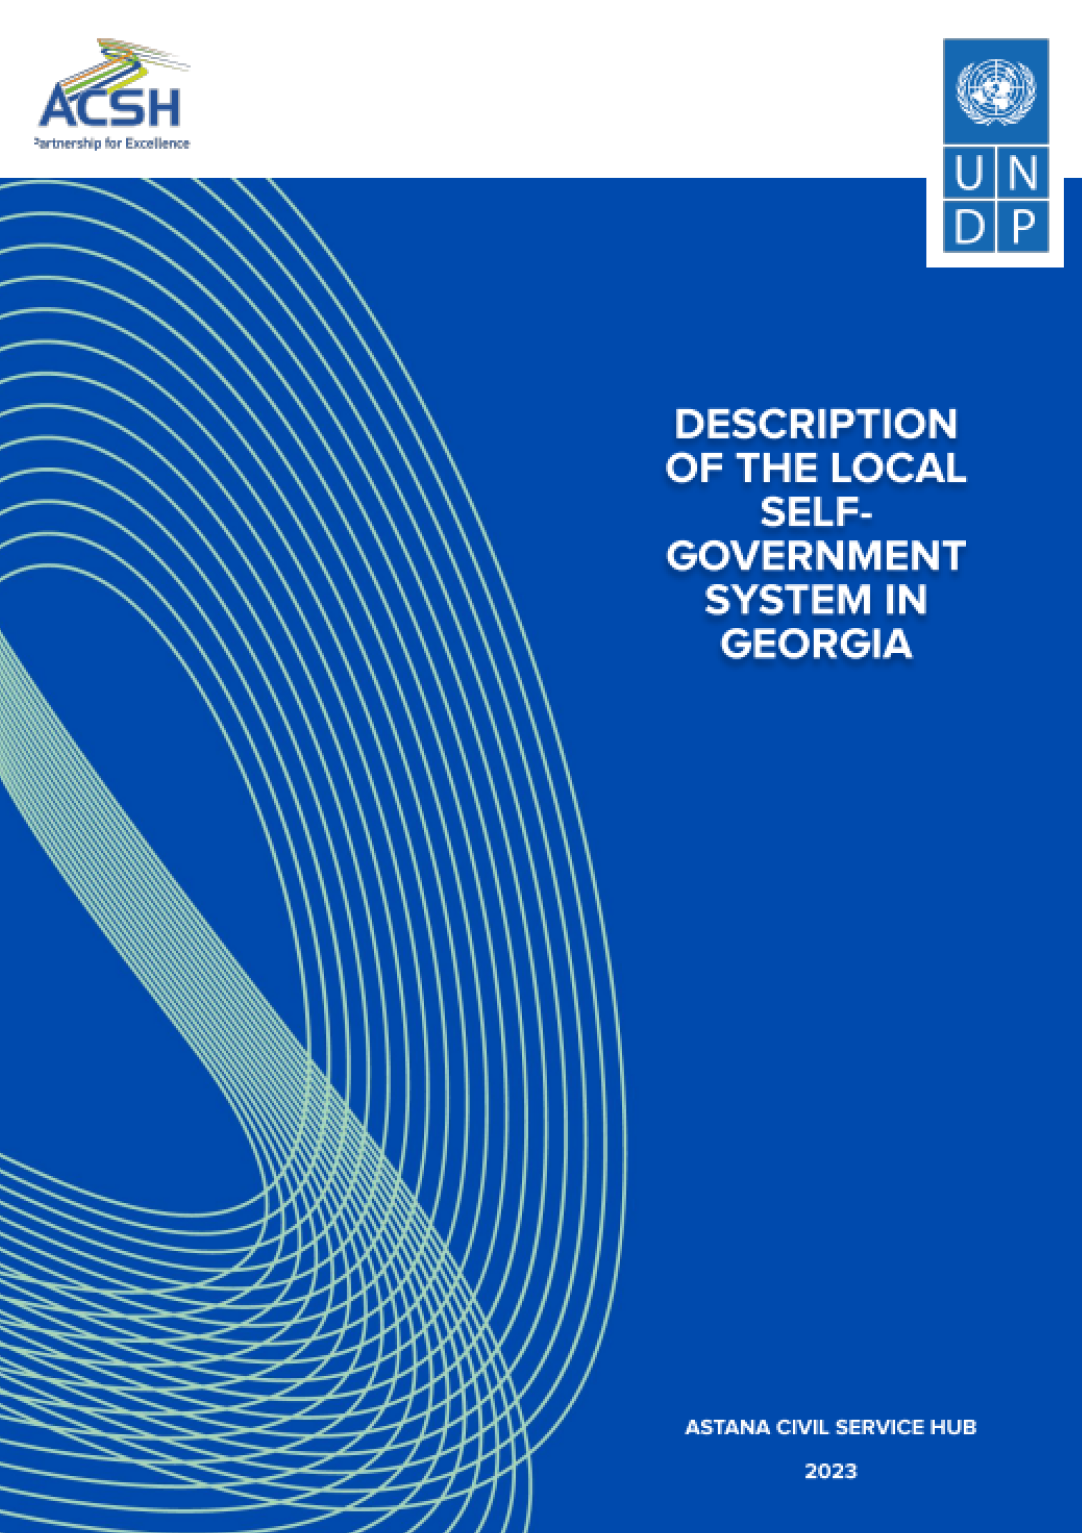 Description of the local self-government system in Georgia